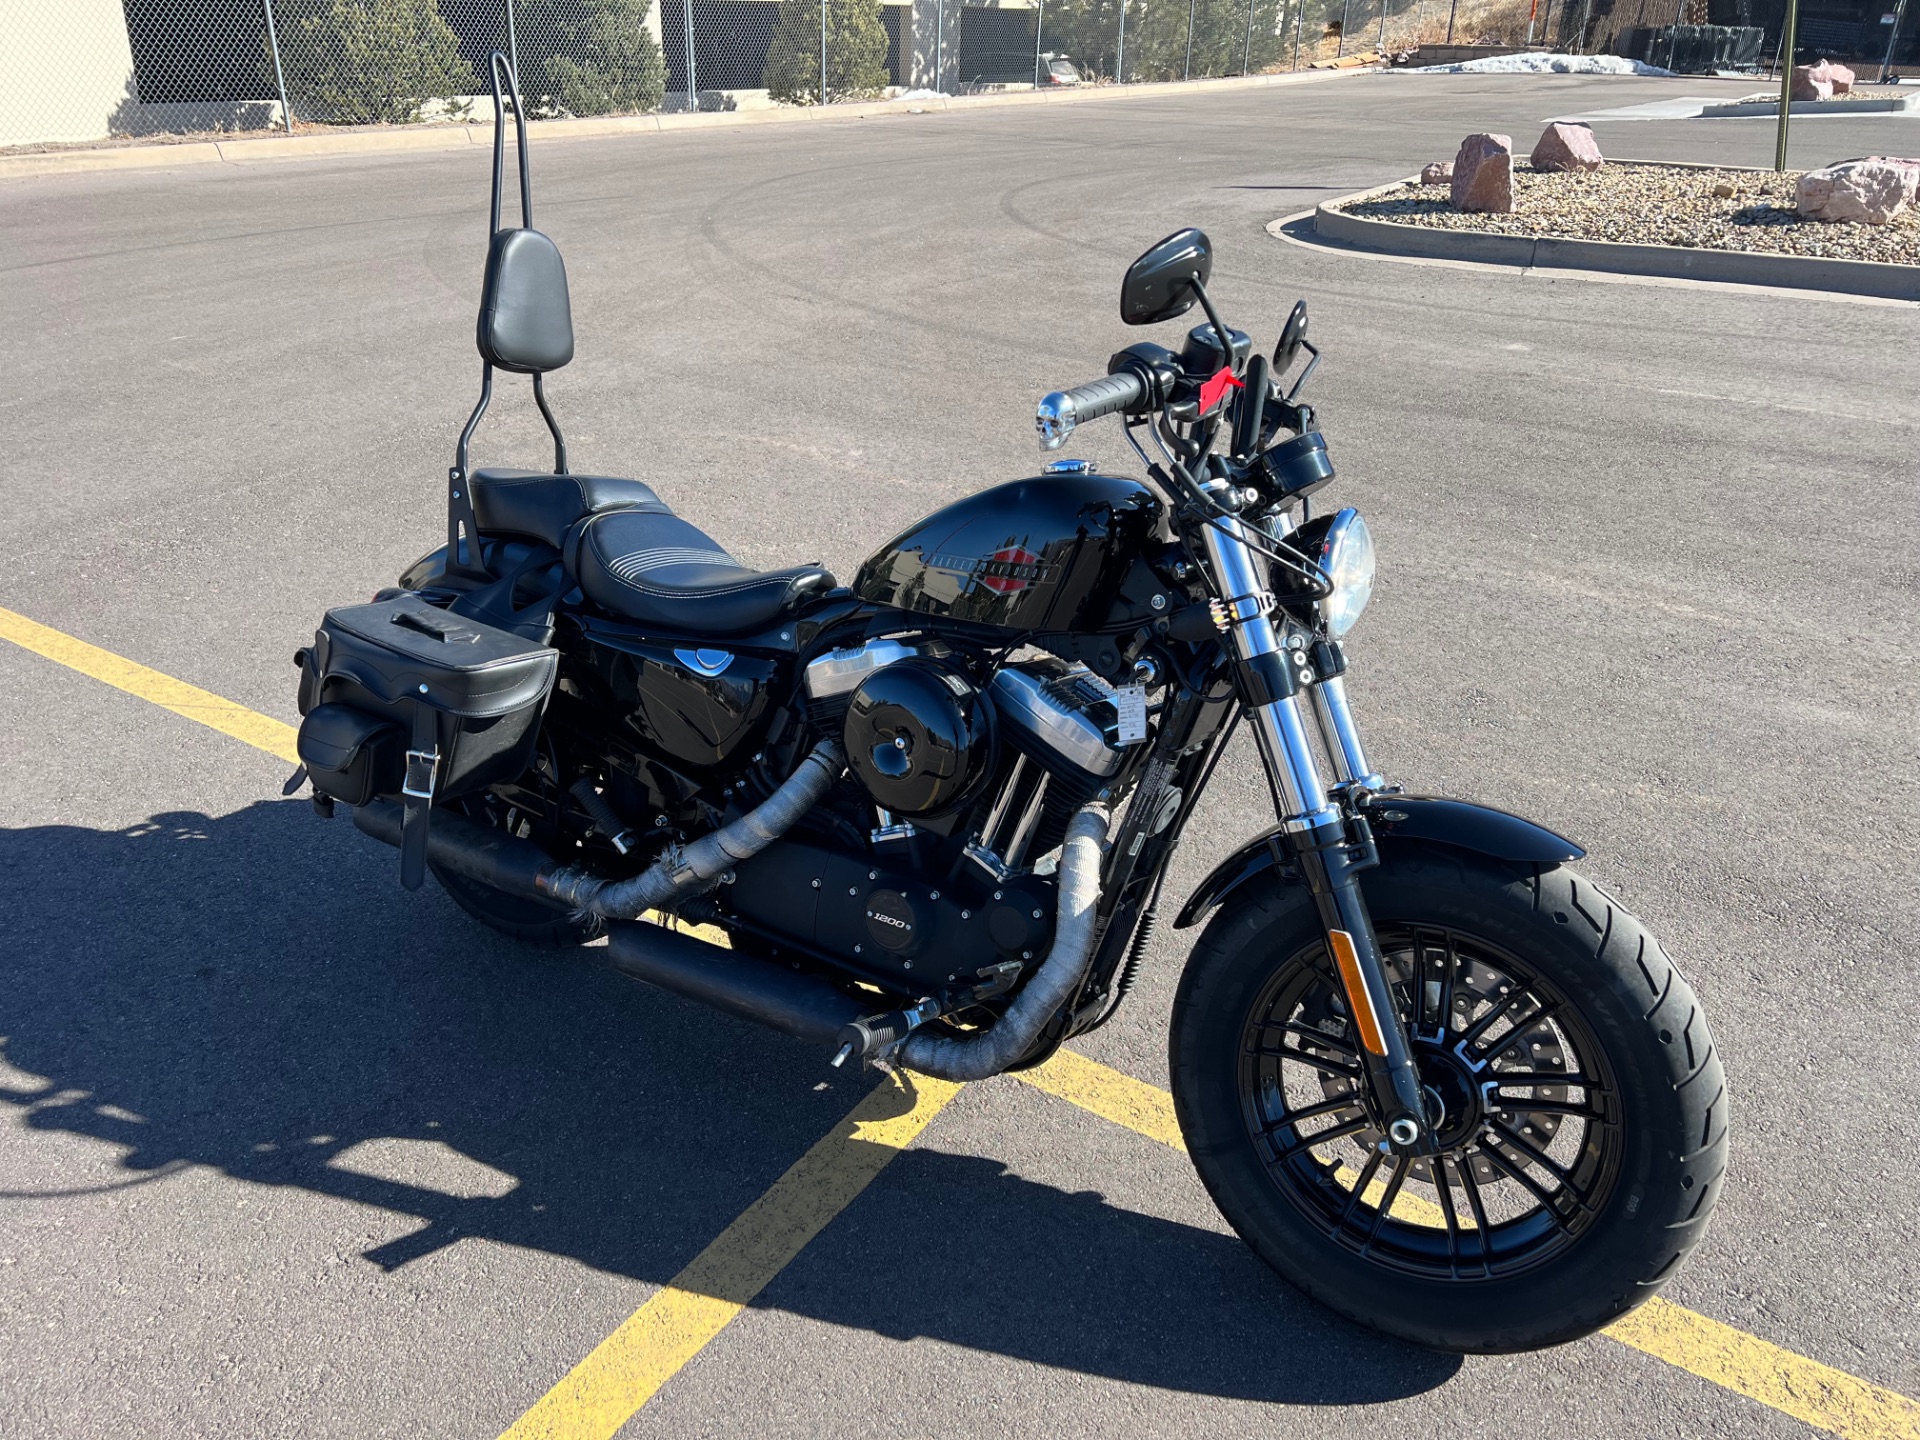 2019 Harley-Davidson Forty-Eight® in Colorado Springs, Colorado - Photo 2